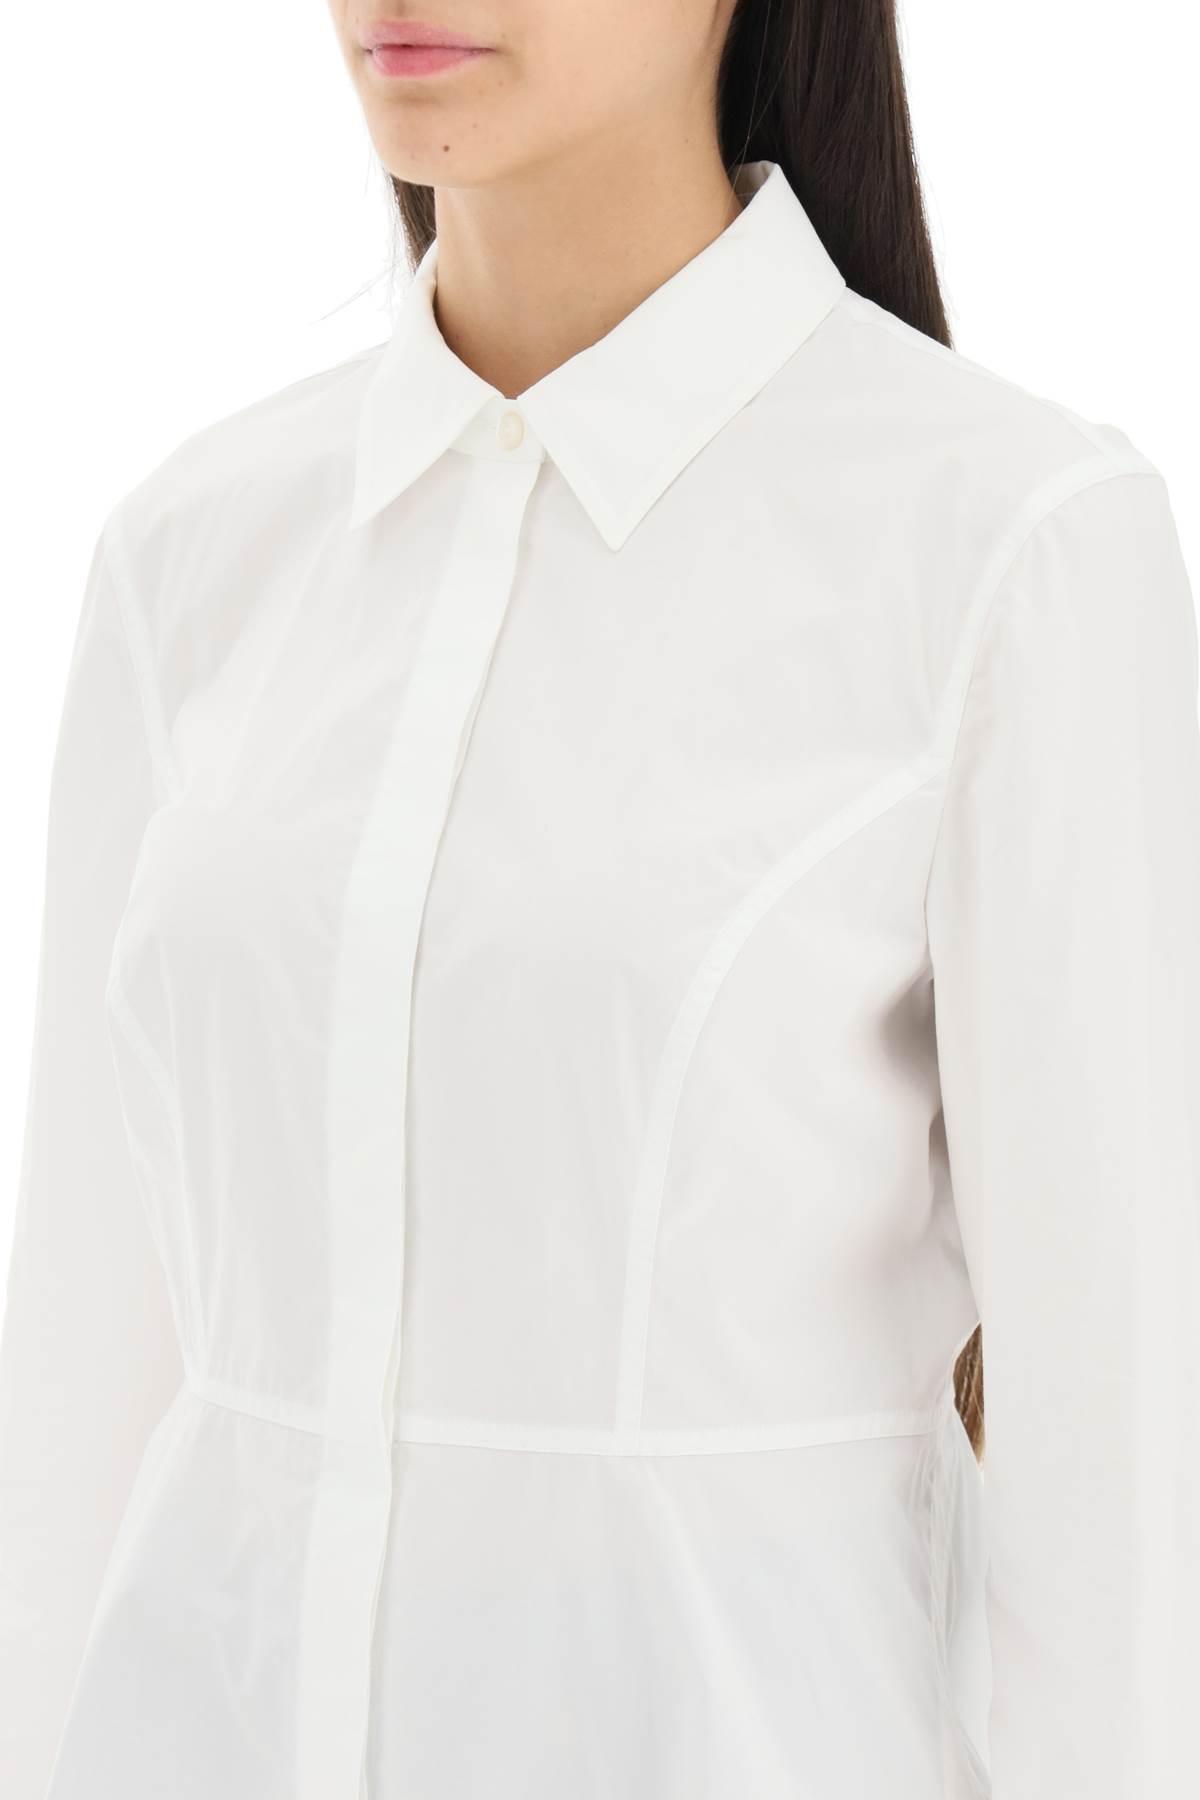 Tory Burch Cotton Poplin Shirt in White | Lyst